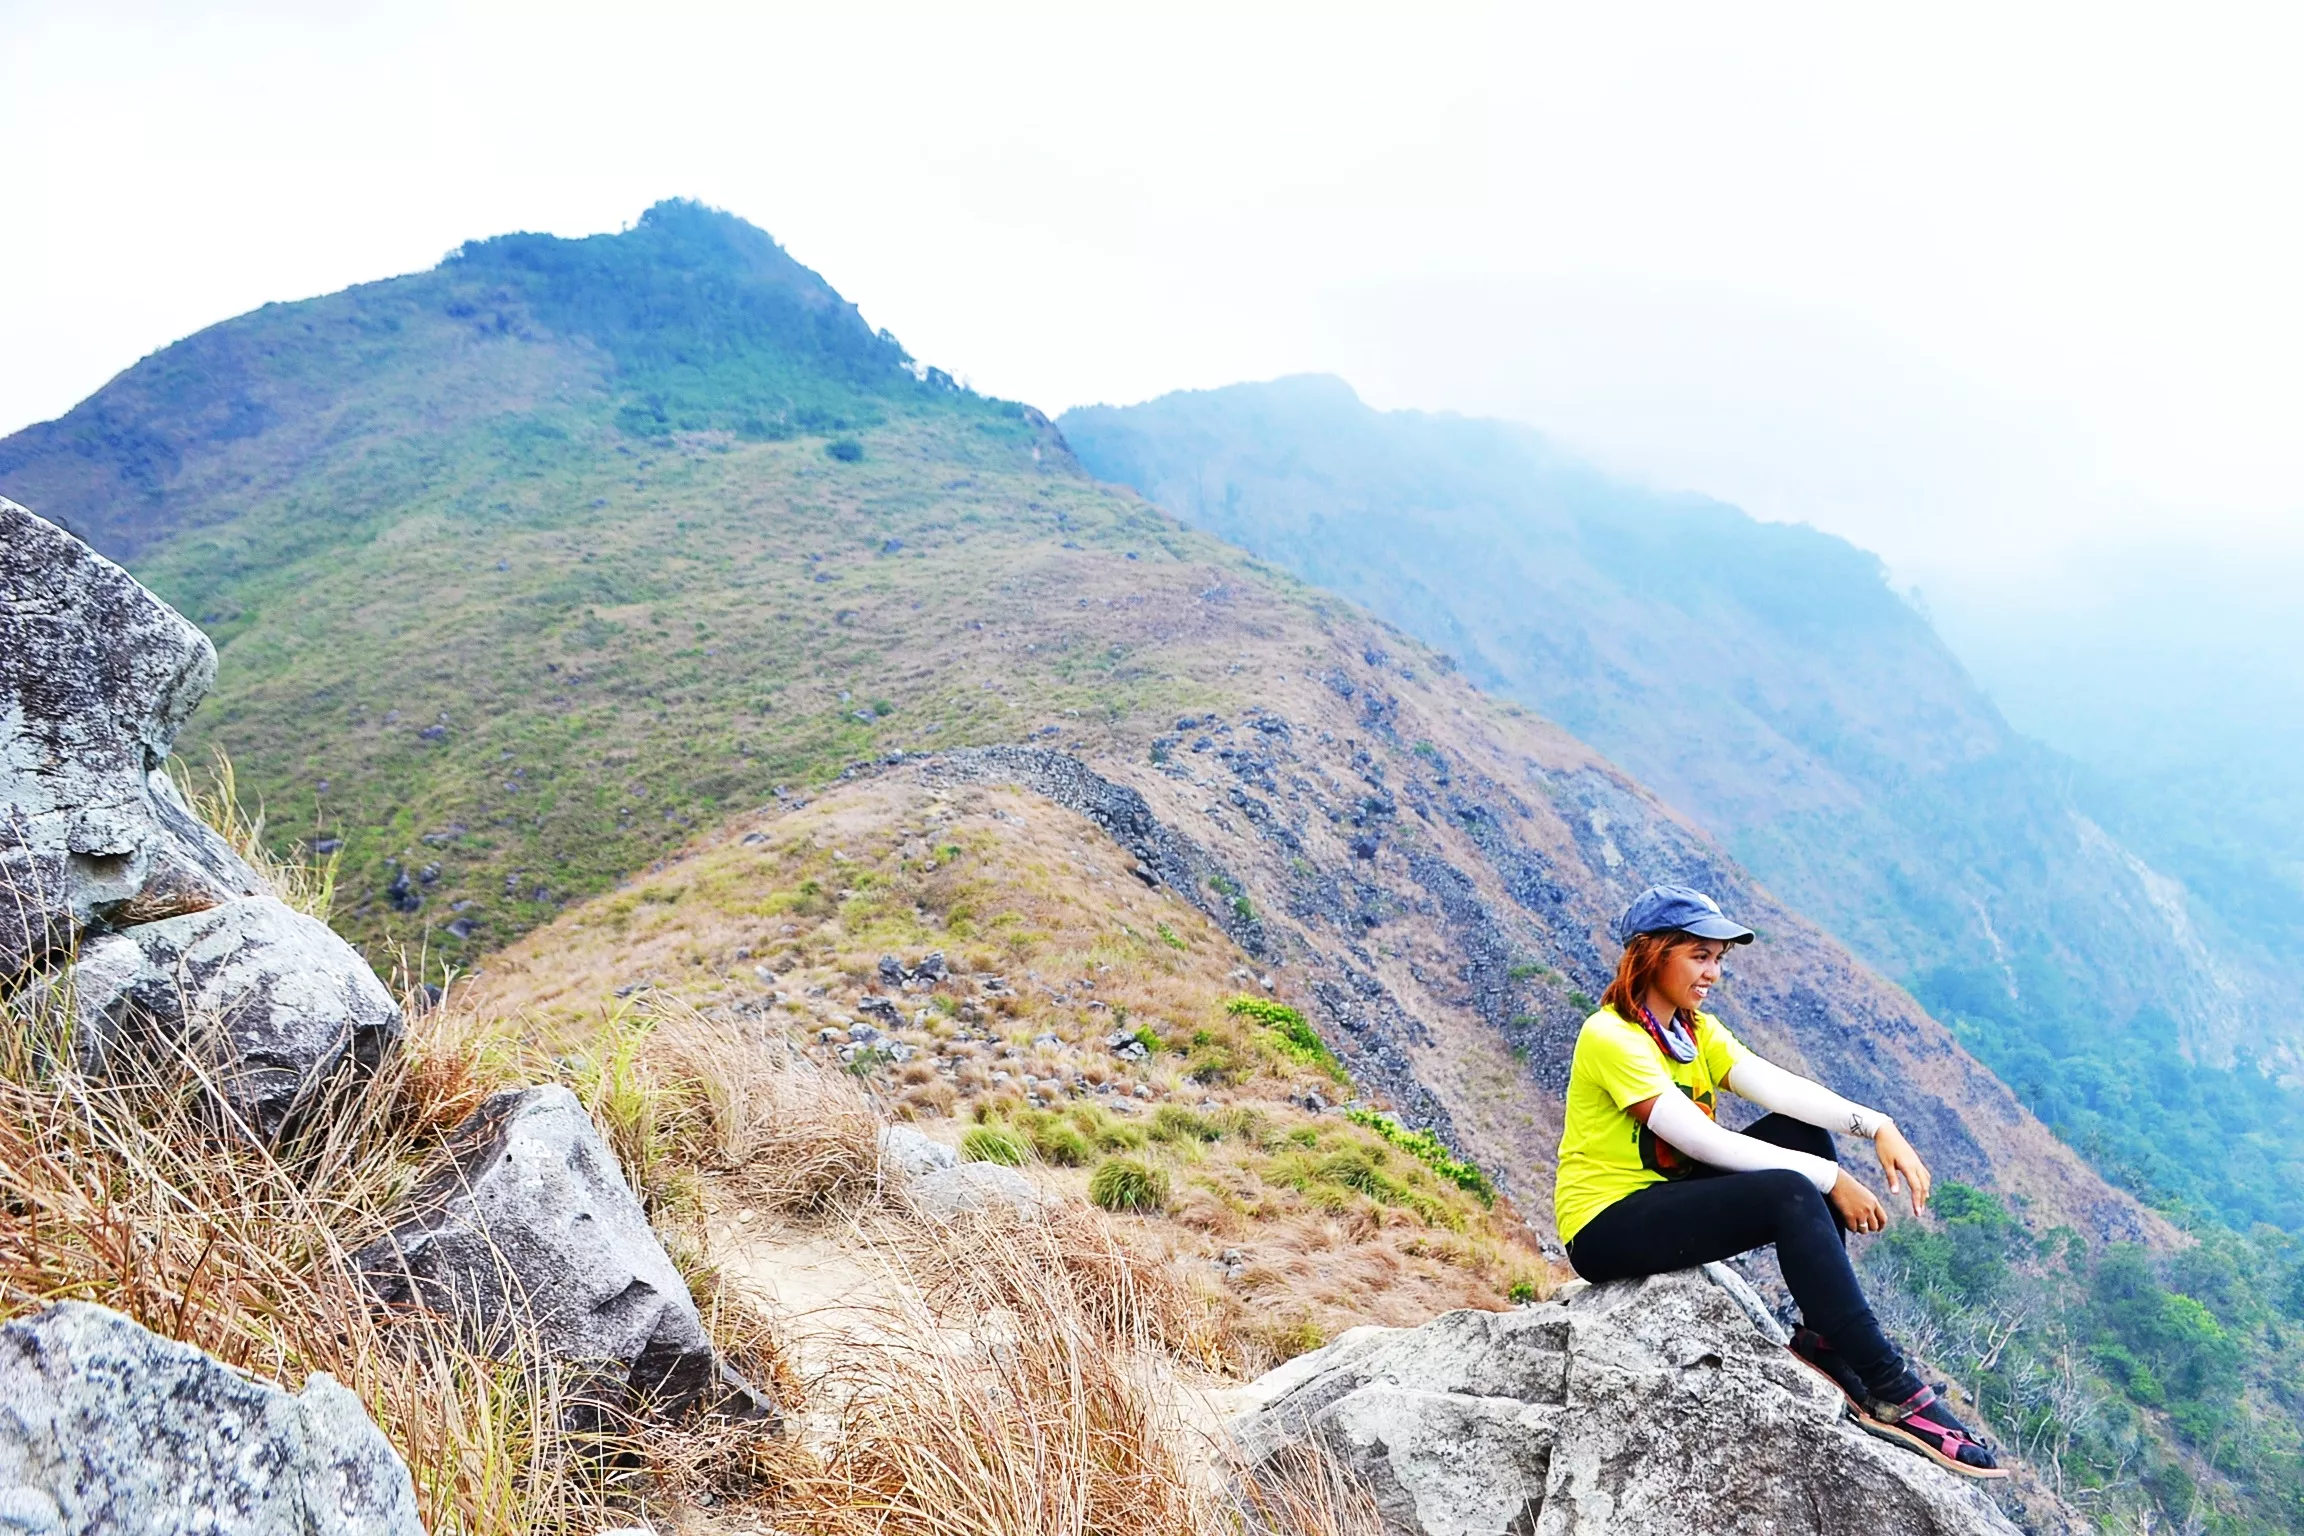 Tarak Ridge in Philippines, Central Asia | Trekking & Hiking - Rated 0.8